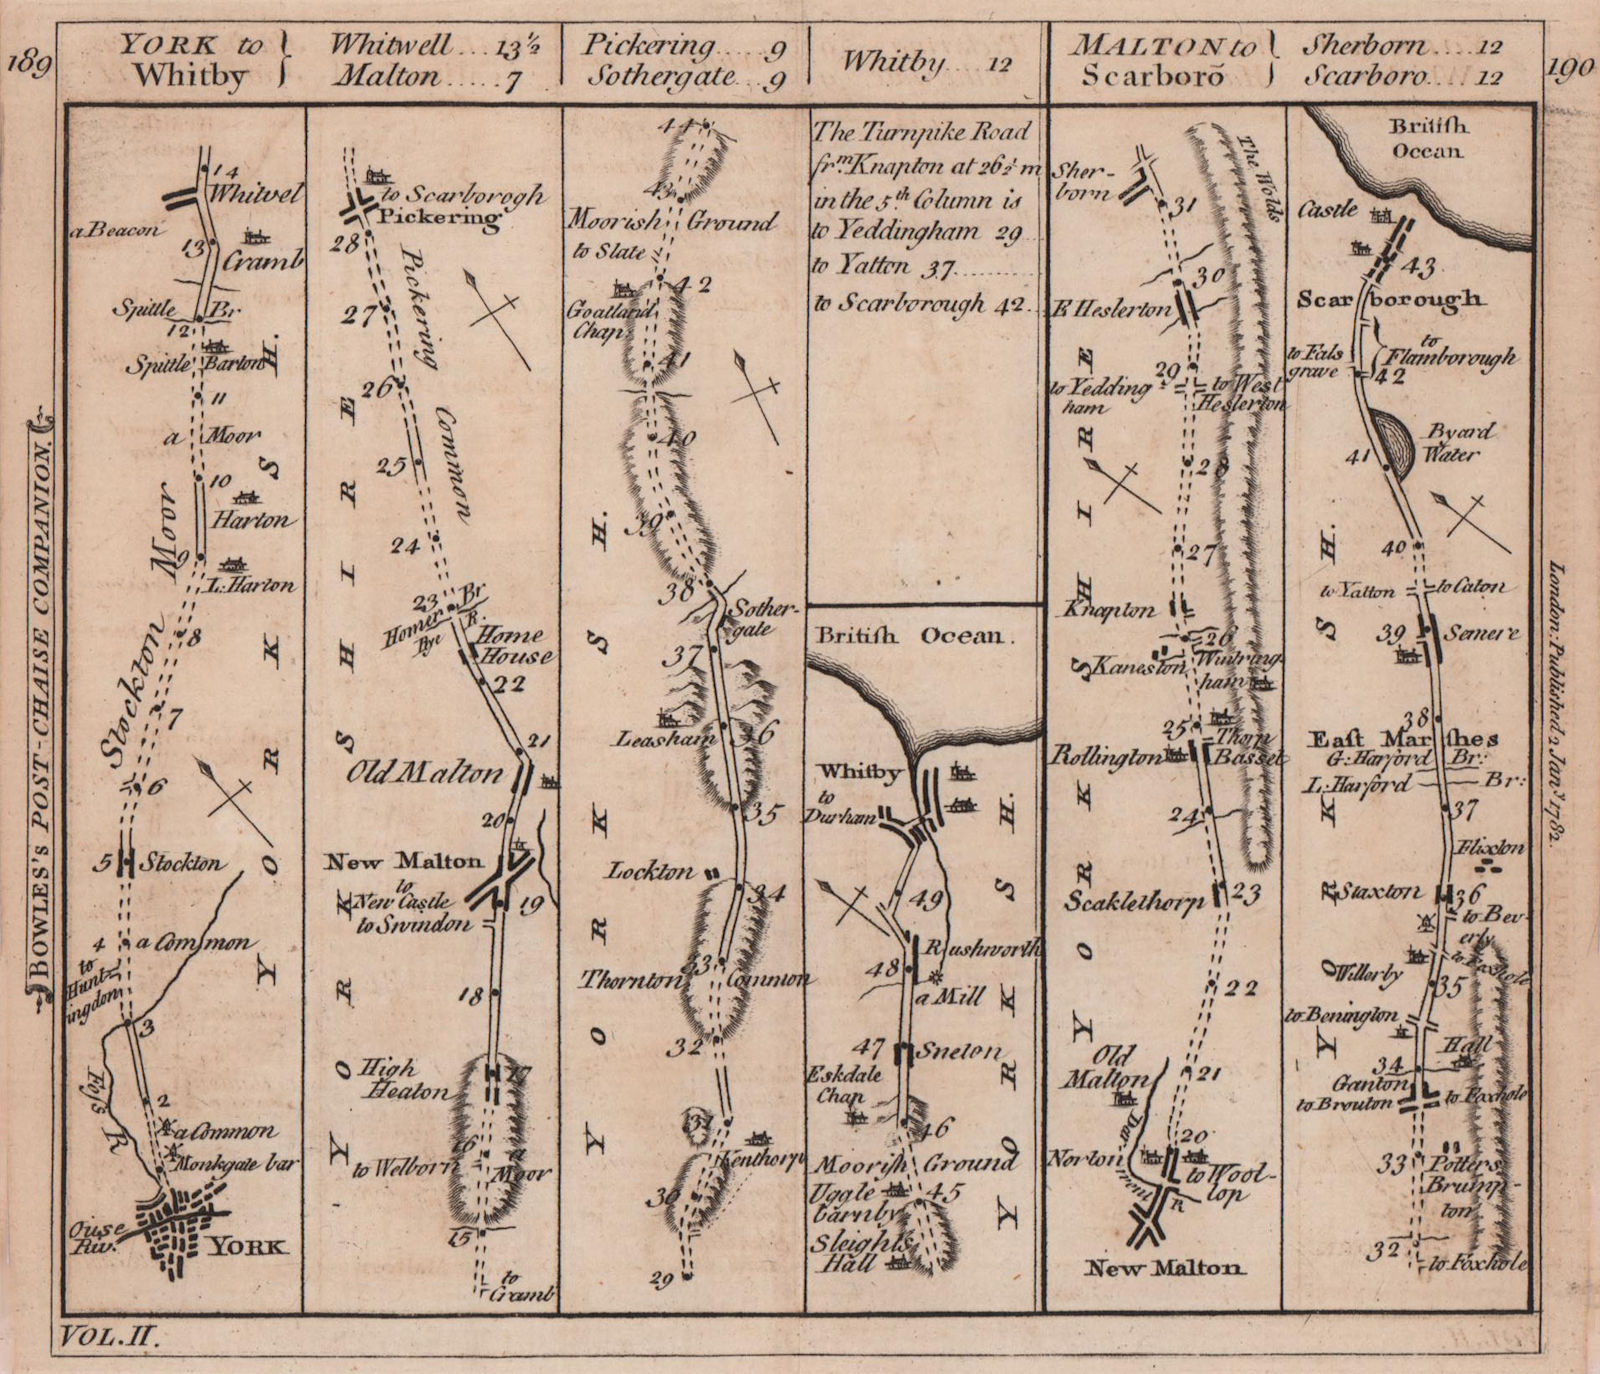 Associate Product York-Pickering-Whitby. New Malton-Scarborough road strip map. BOWLES 1782